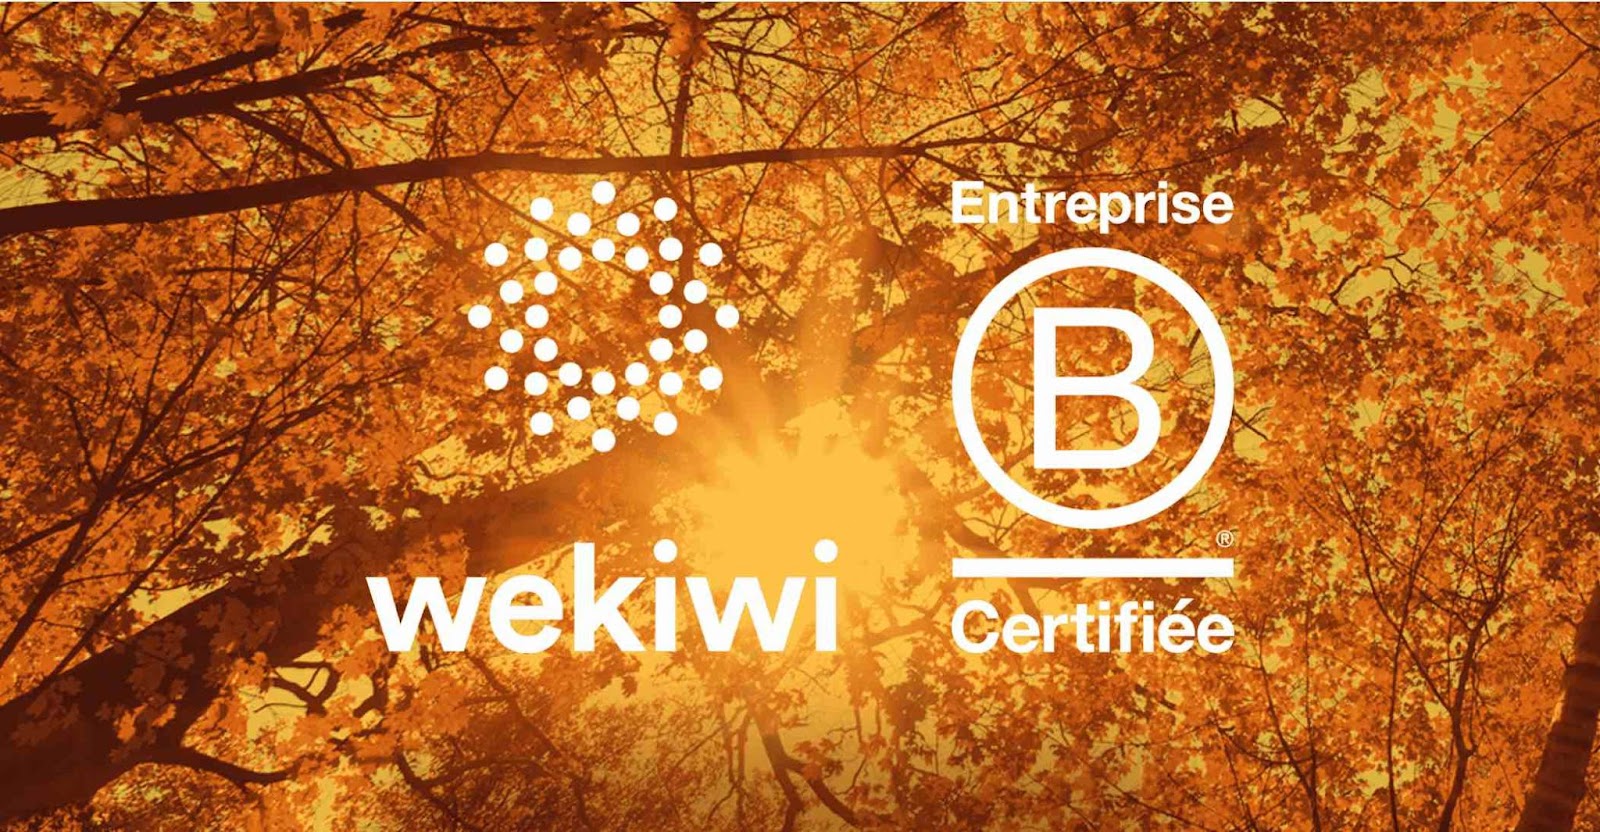 wekiwi certifiee bcorp
